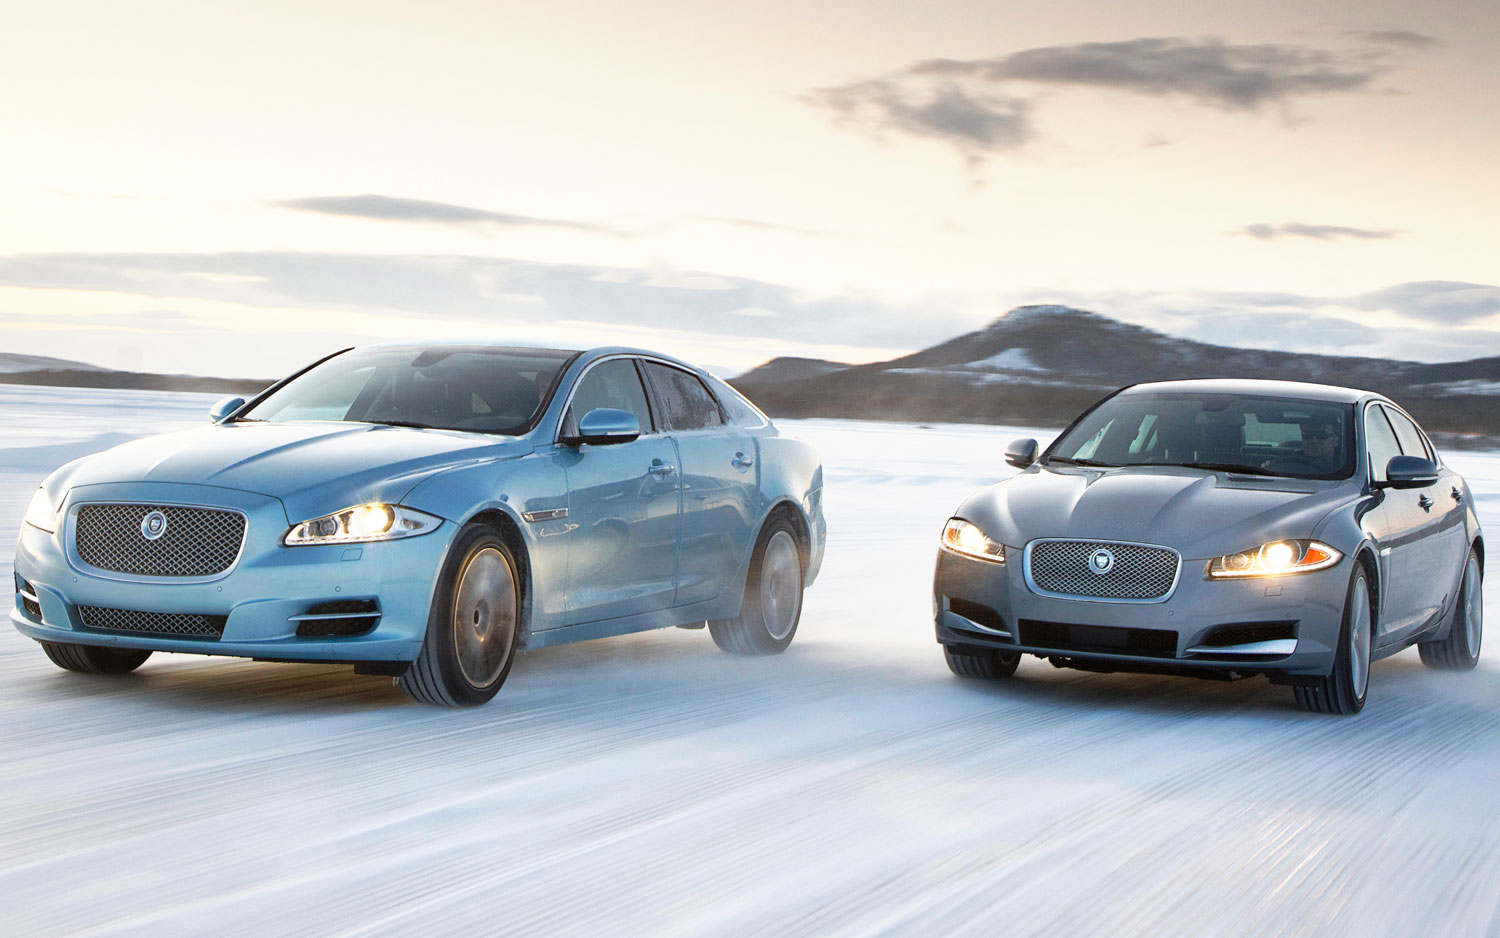 Jaguar xf и xe отличия